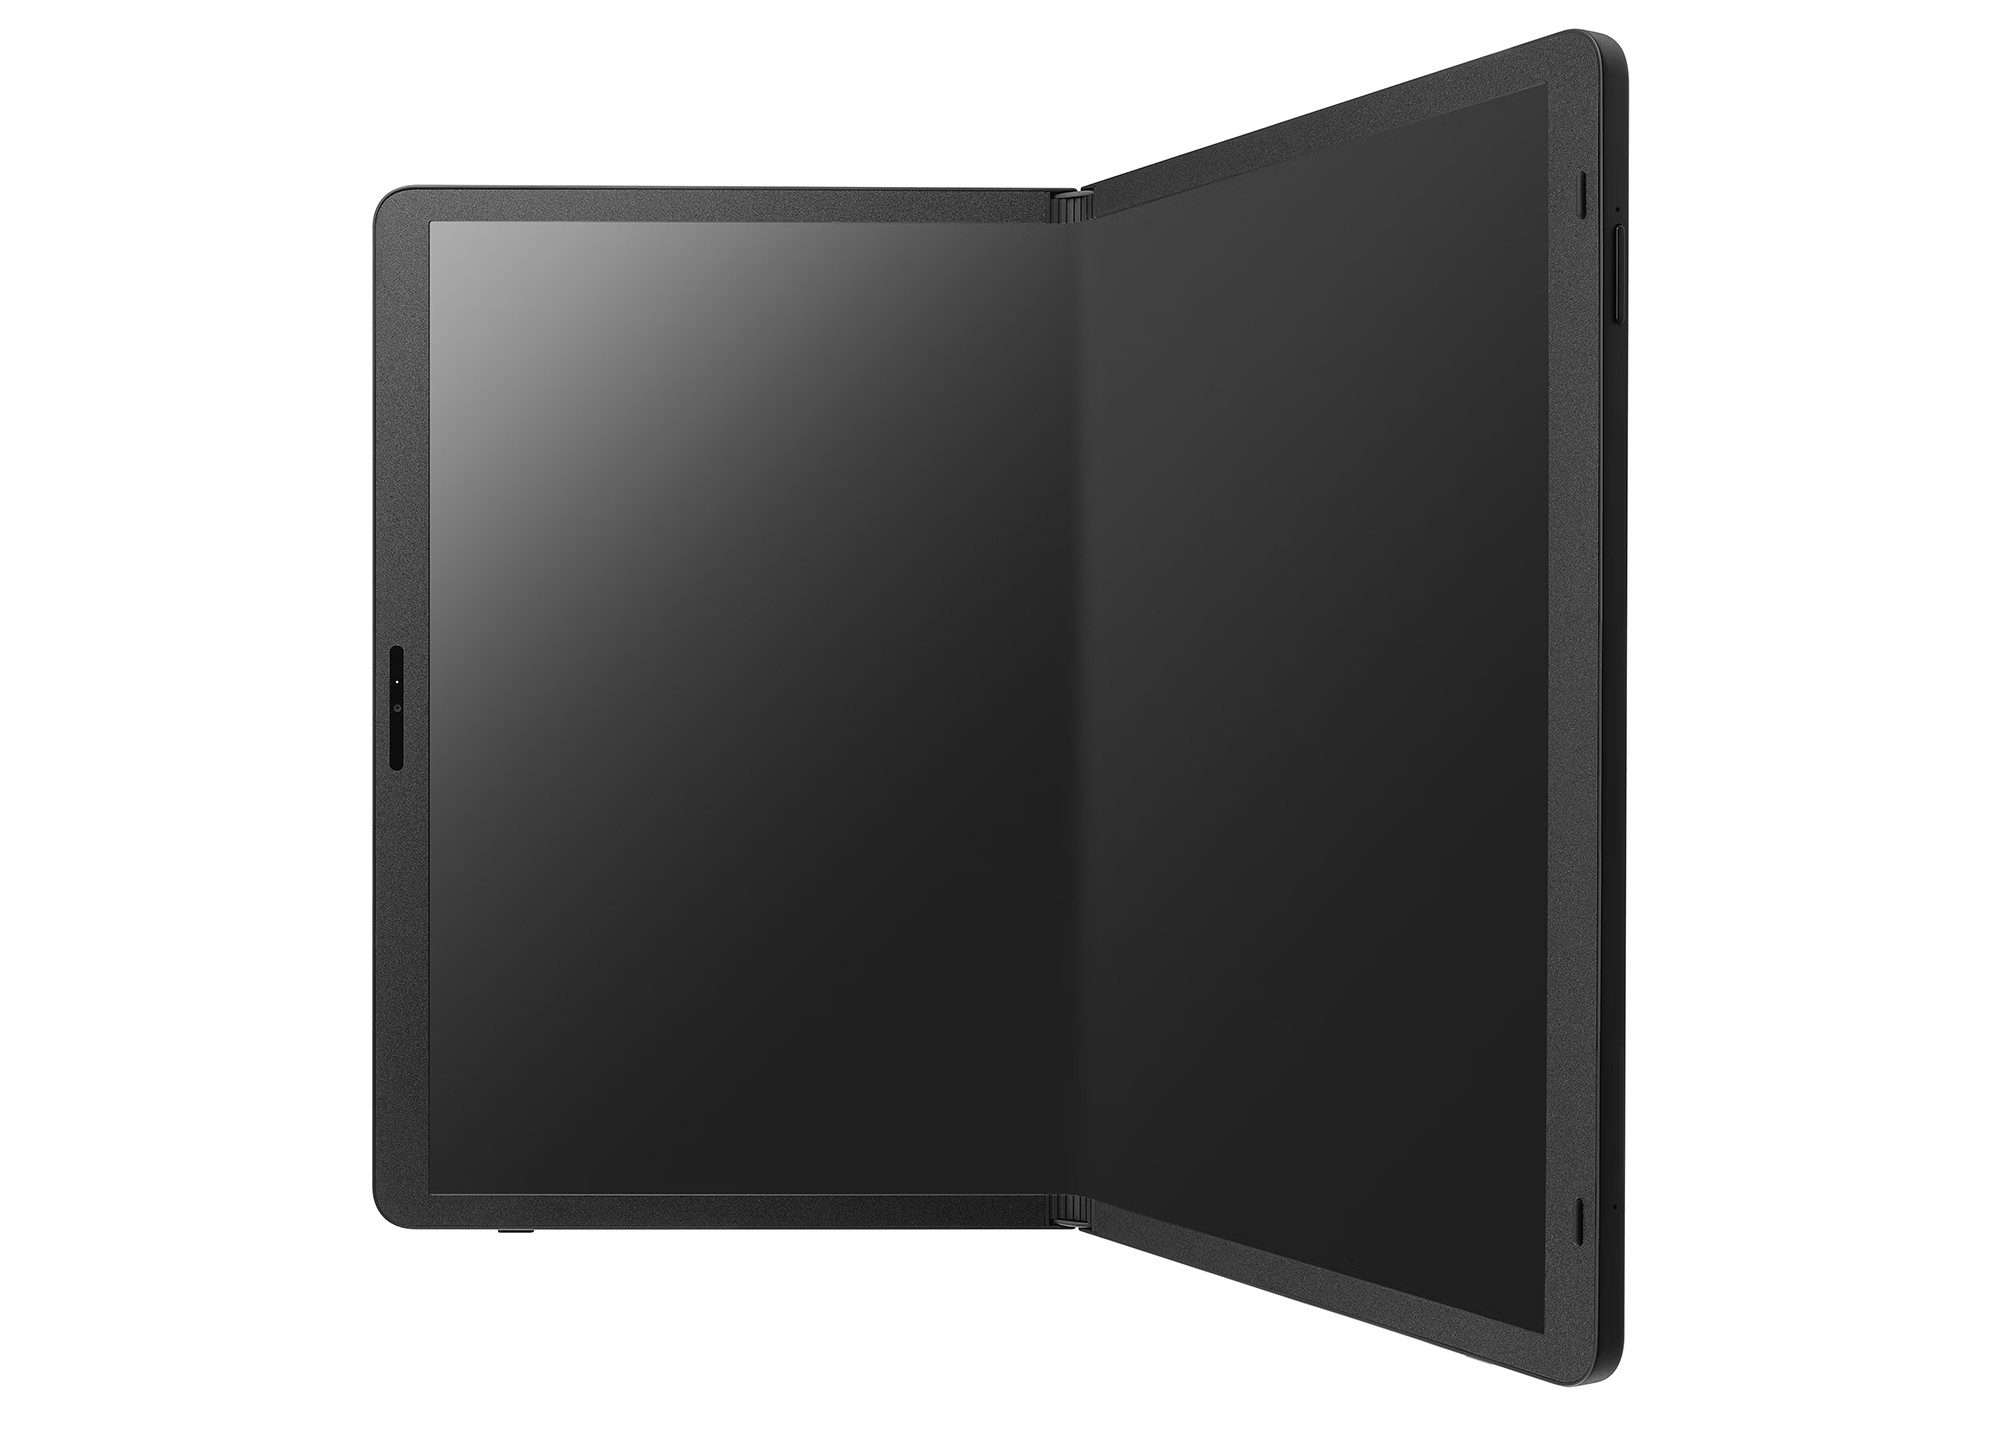 LG Gram Fold modalità notebook tablet